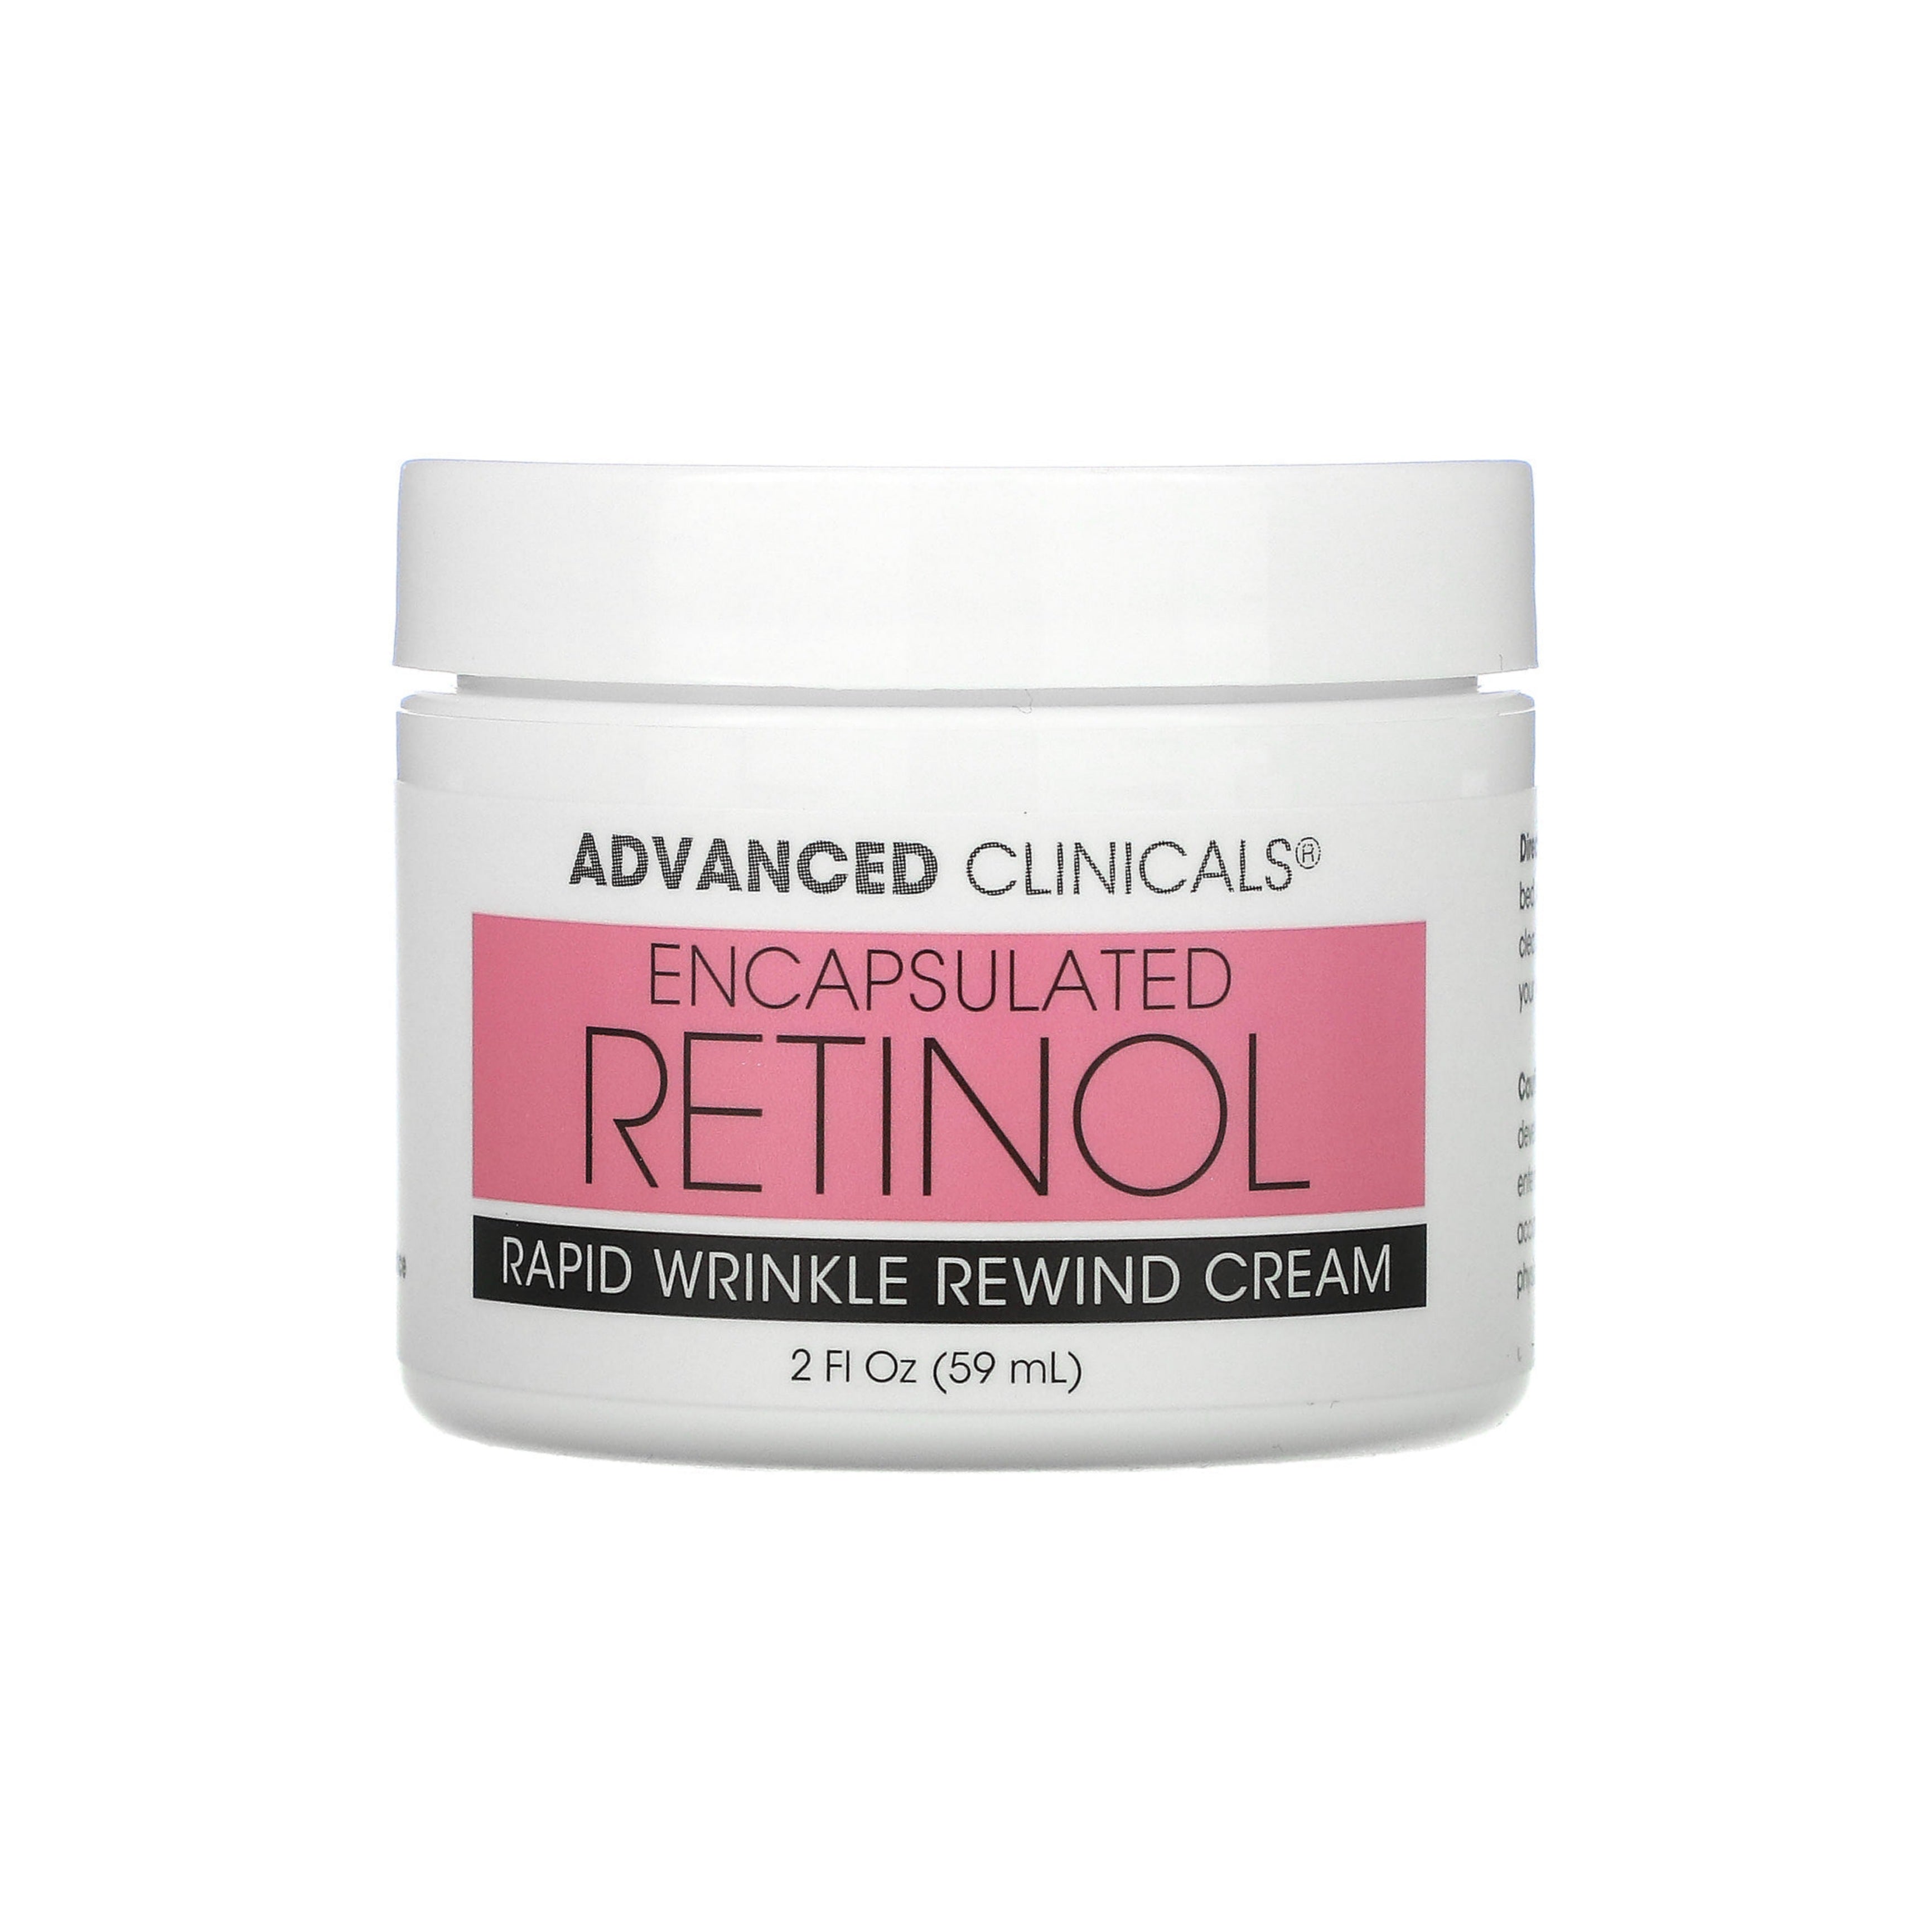 ADVANCED CLINICALS Encapsulated Retinol Rapid Wrinkle Rewind Cream كريم الريتنول للبشرة